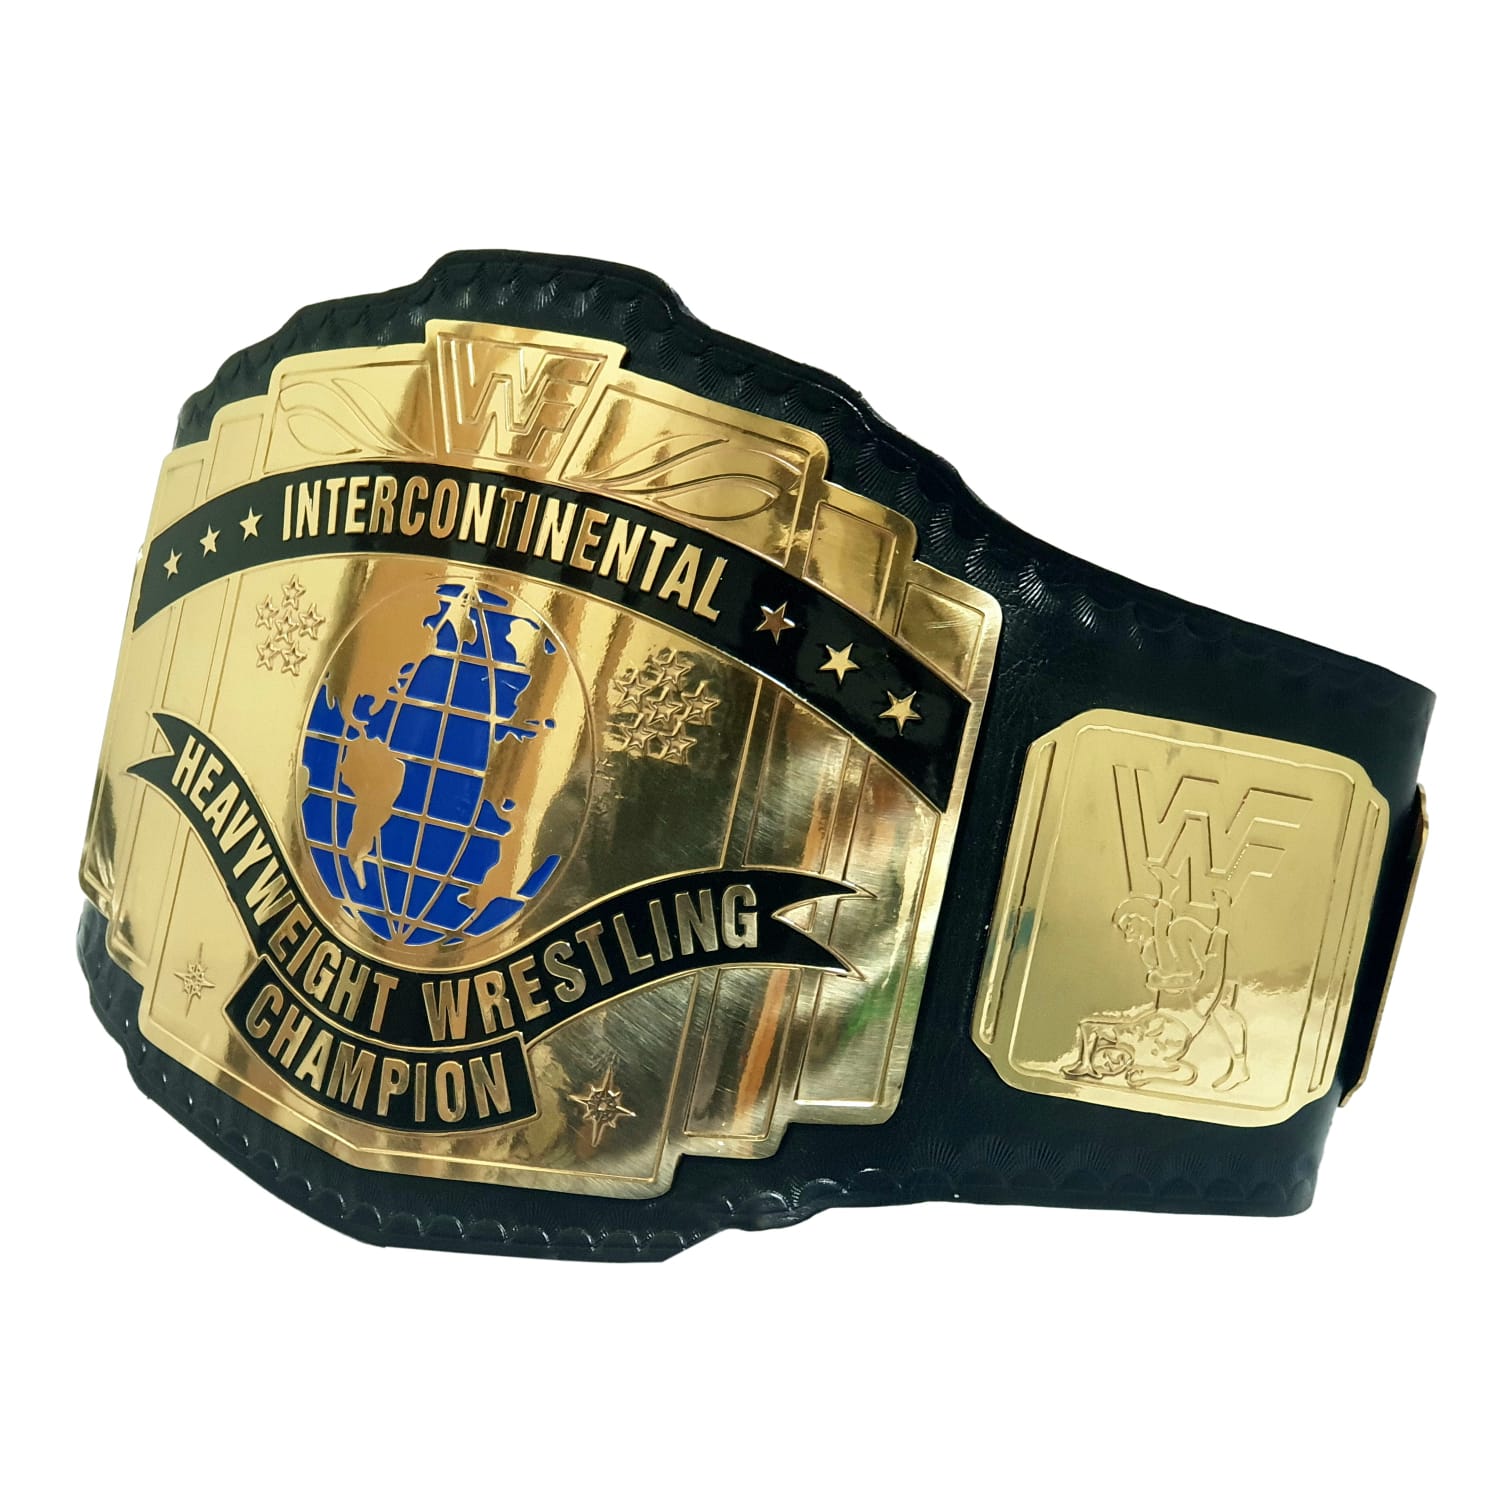 Wresling World's Greatest Championship Brass Belt-018